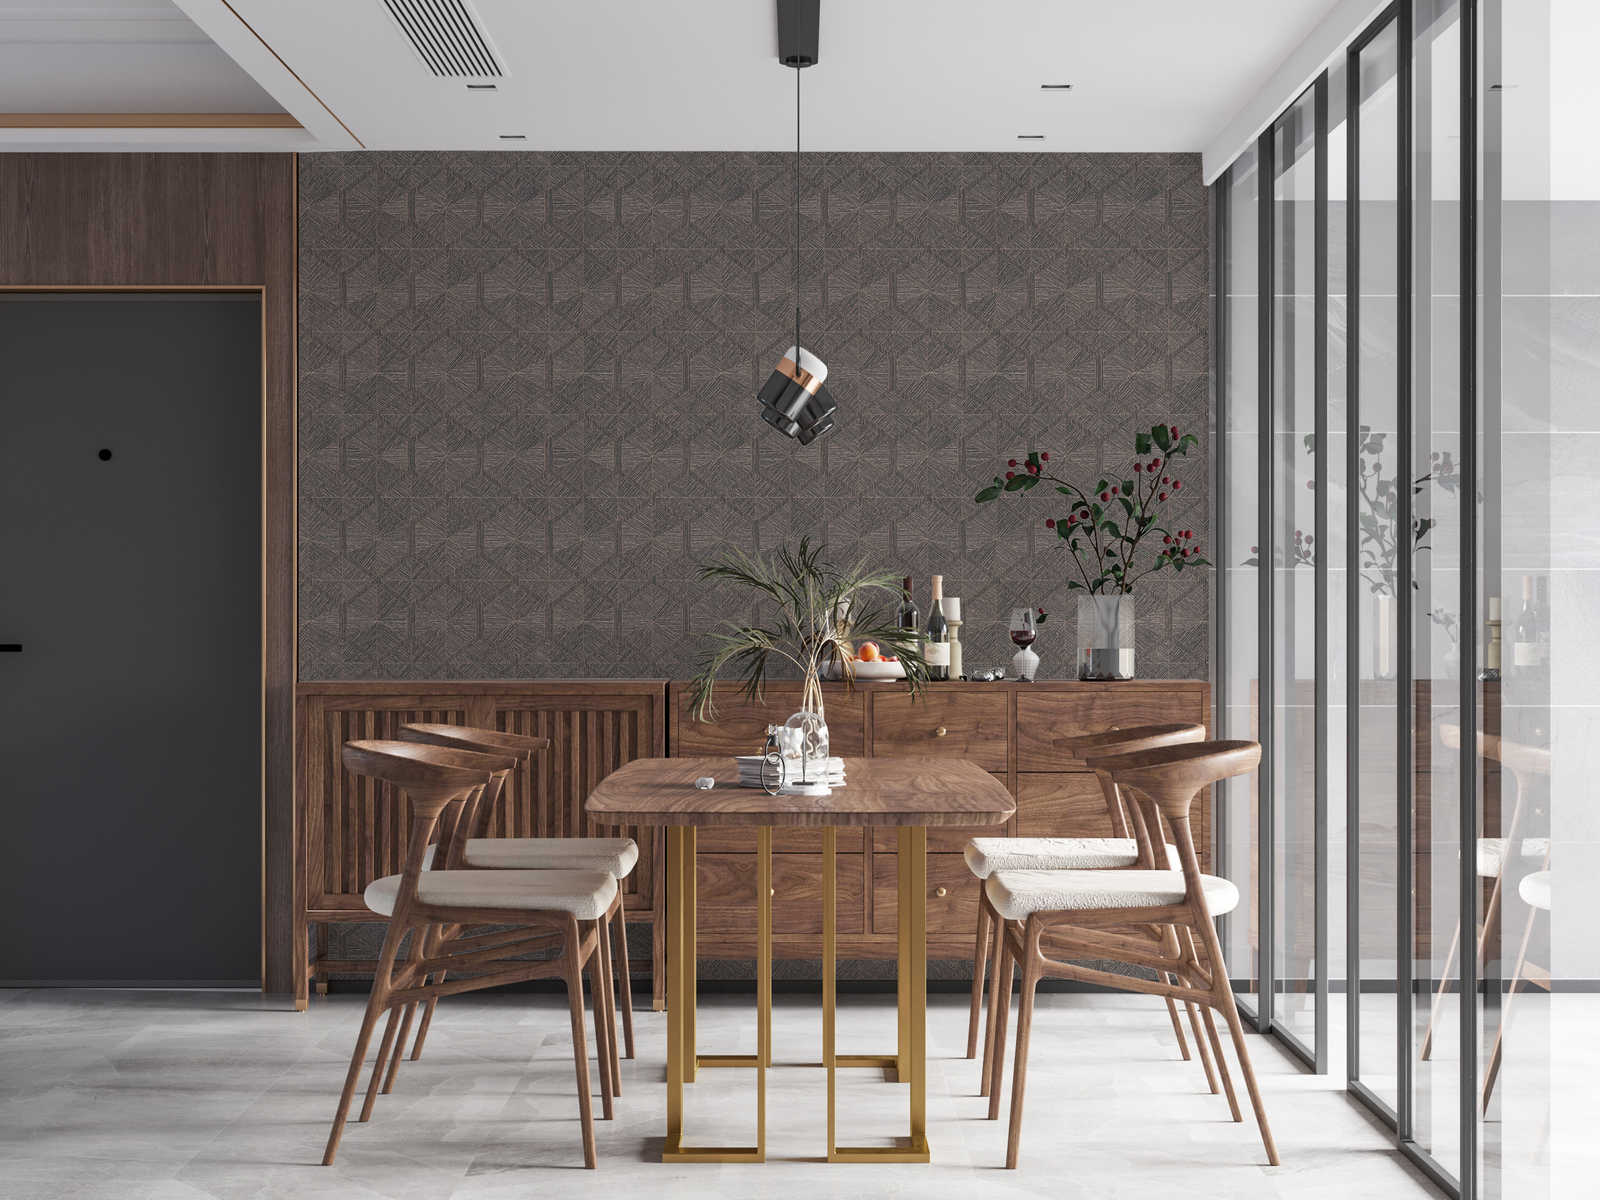             Wallpaper graphic pattern wood look with metallic effect - brown, metallic
        